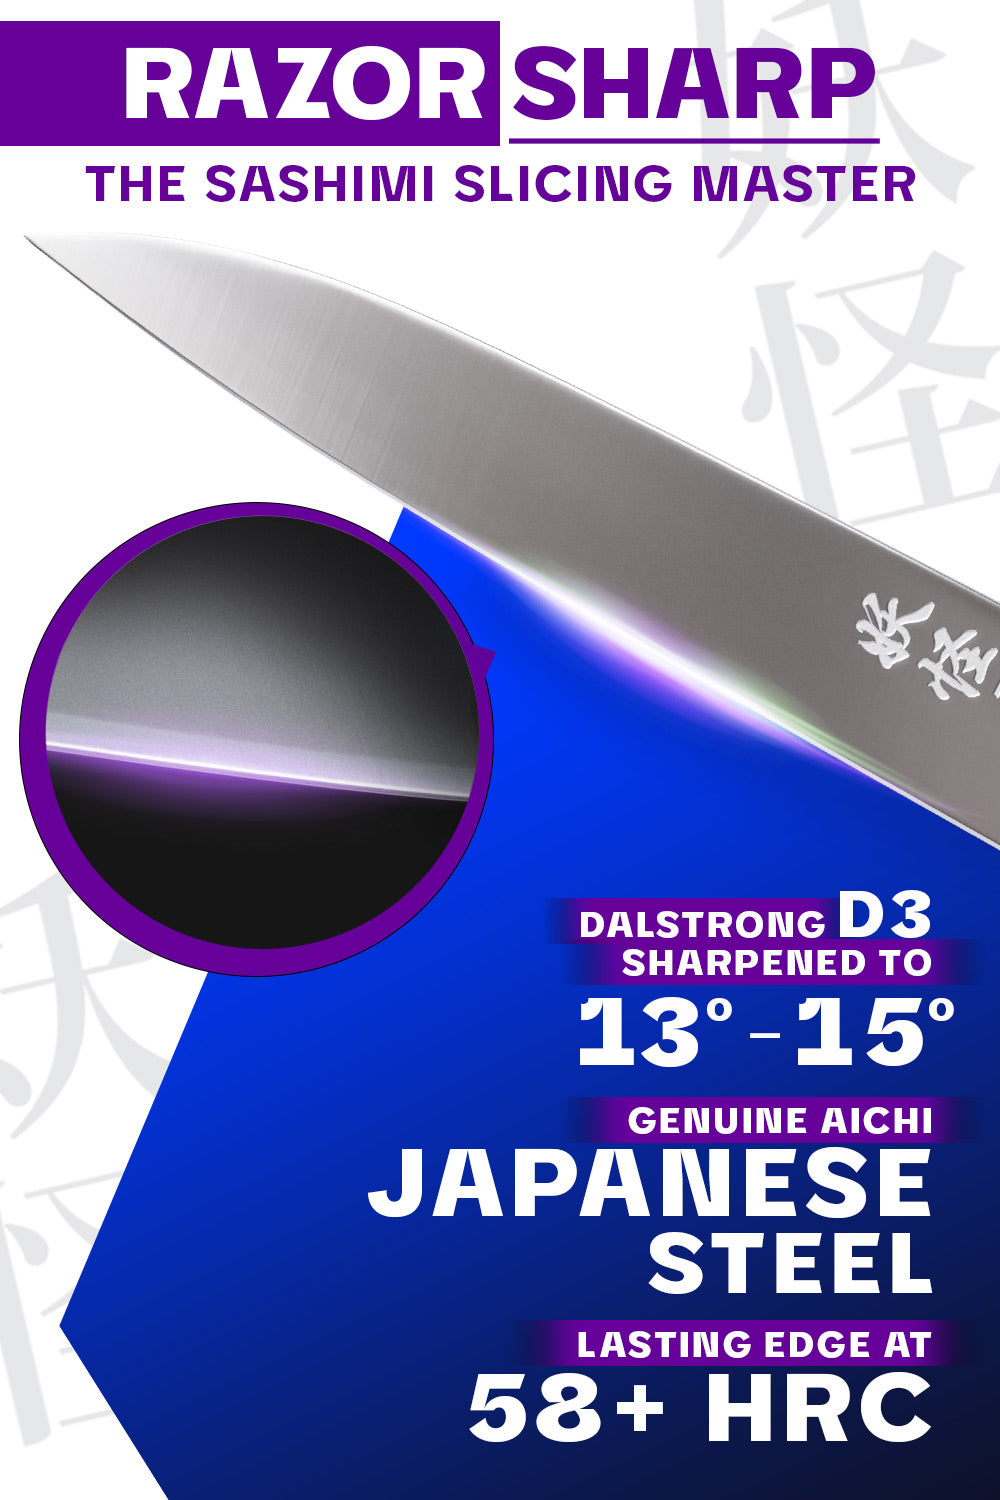 Dalstrong phantom series 9.5 inch yanagiba knife with pakka wood handle featuring it's razor sharp japanese steel blade.